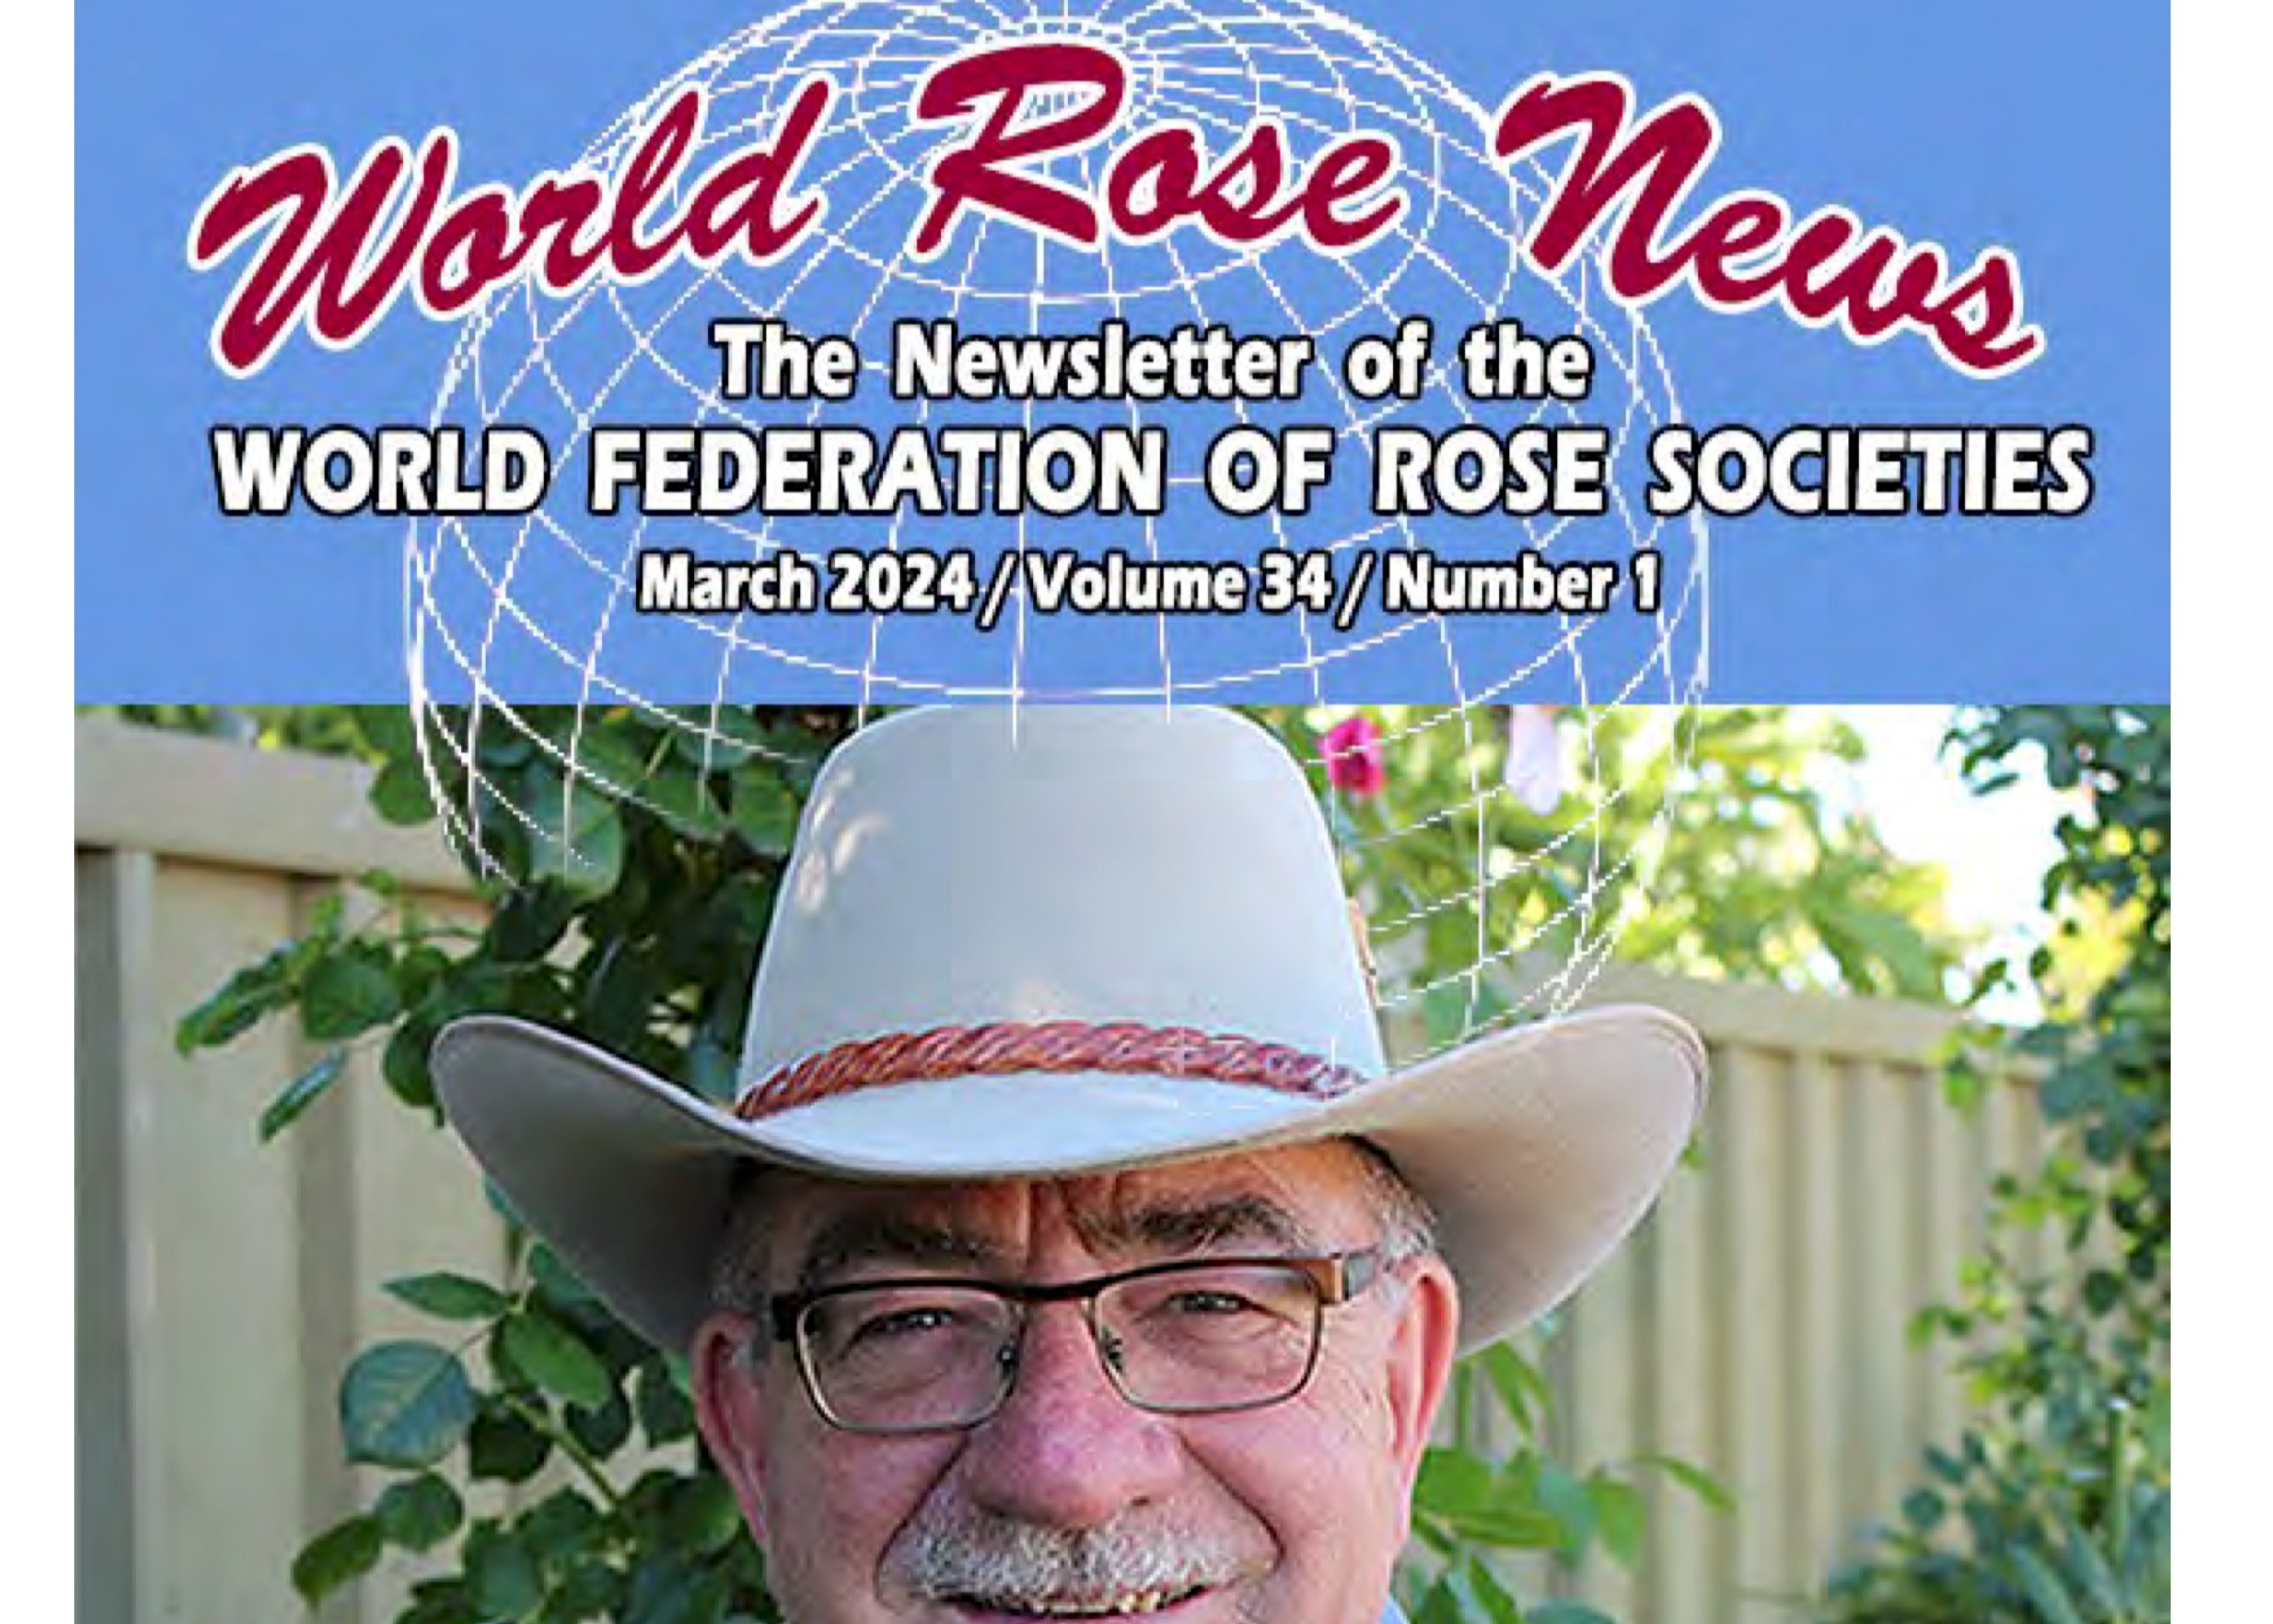 /World Rose News March 2024